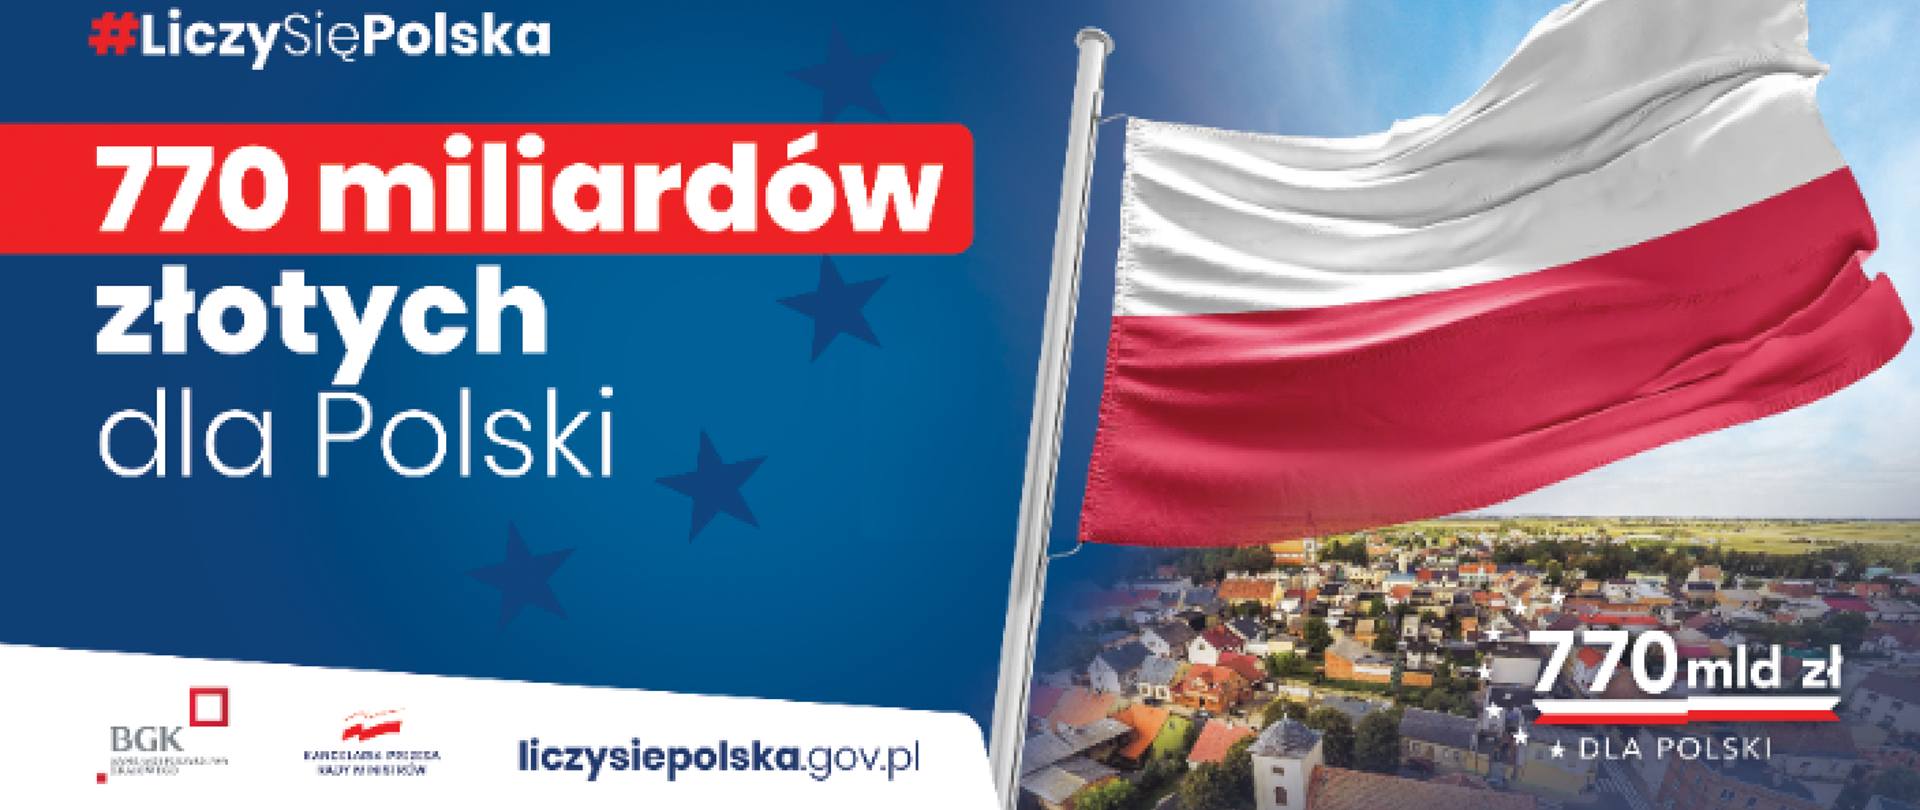 Banner: 770 mld zł dla Polski.